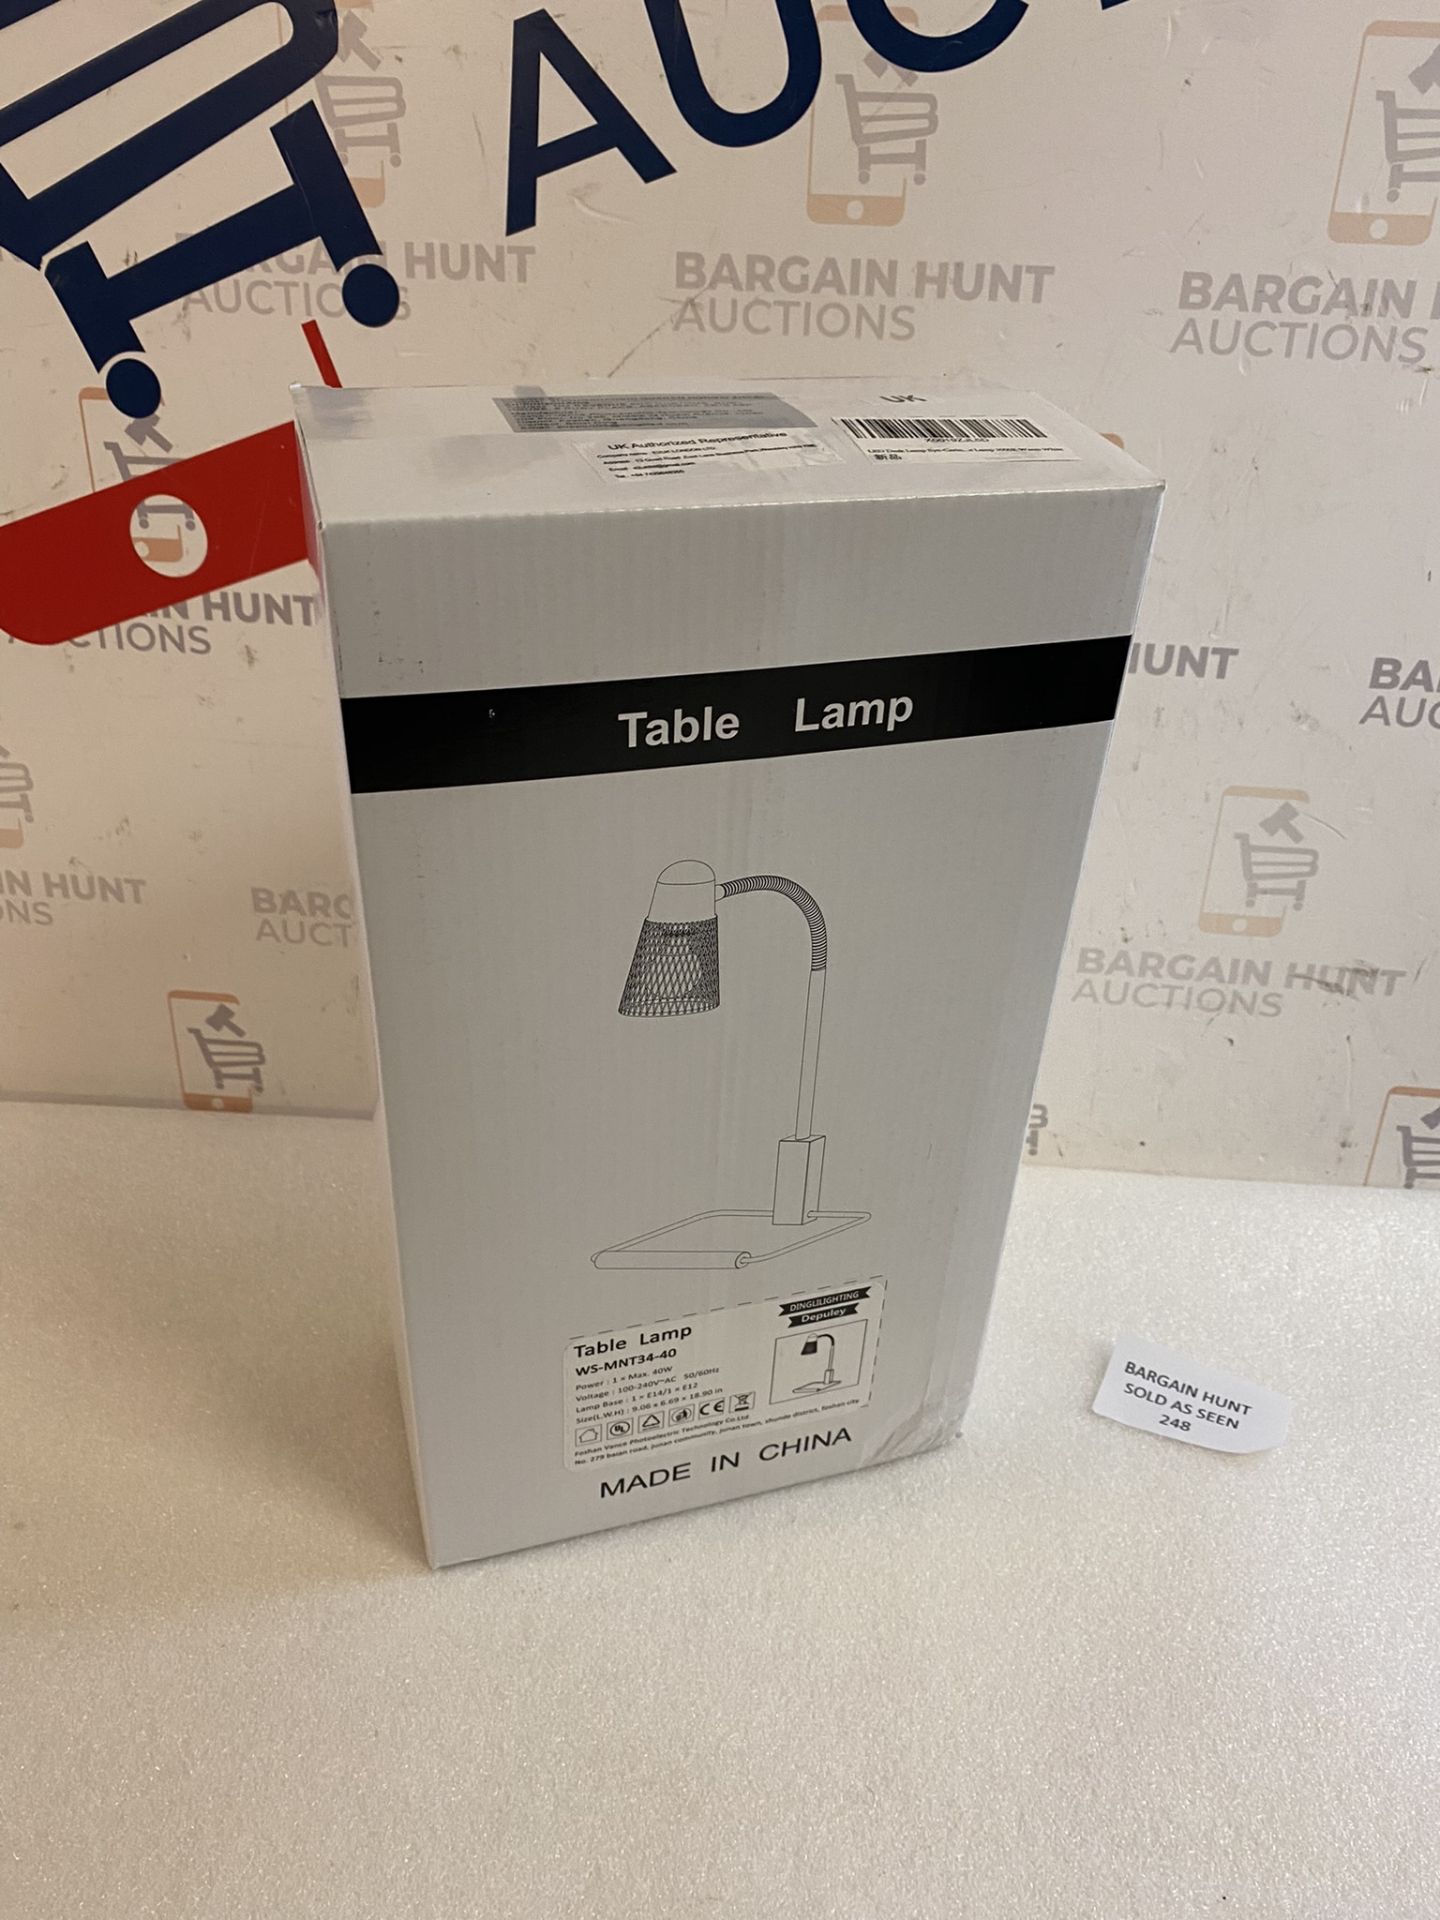 Depuley LED Table Lamp Adjustable LED Reading Desk Lamp RRP £21.99 - Image 2 of 2